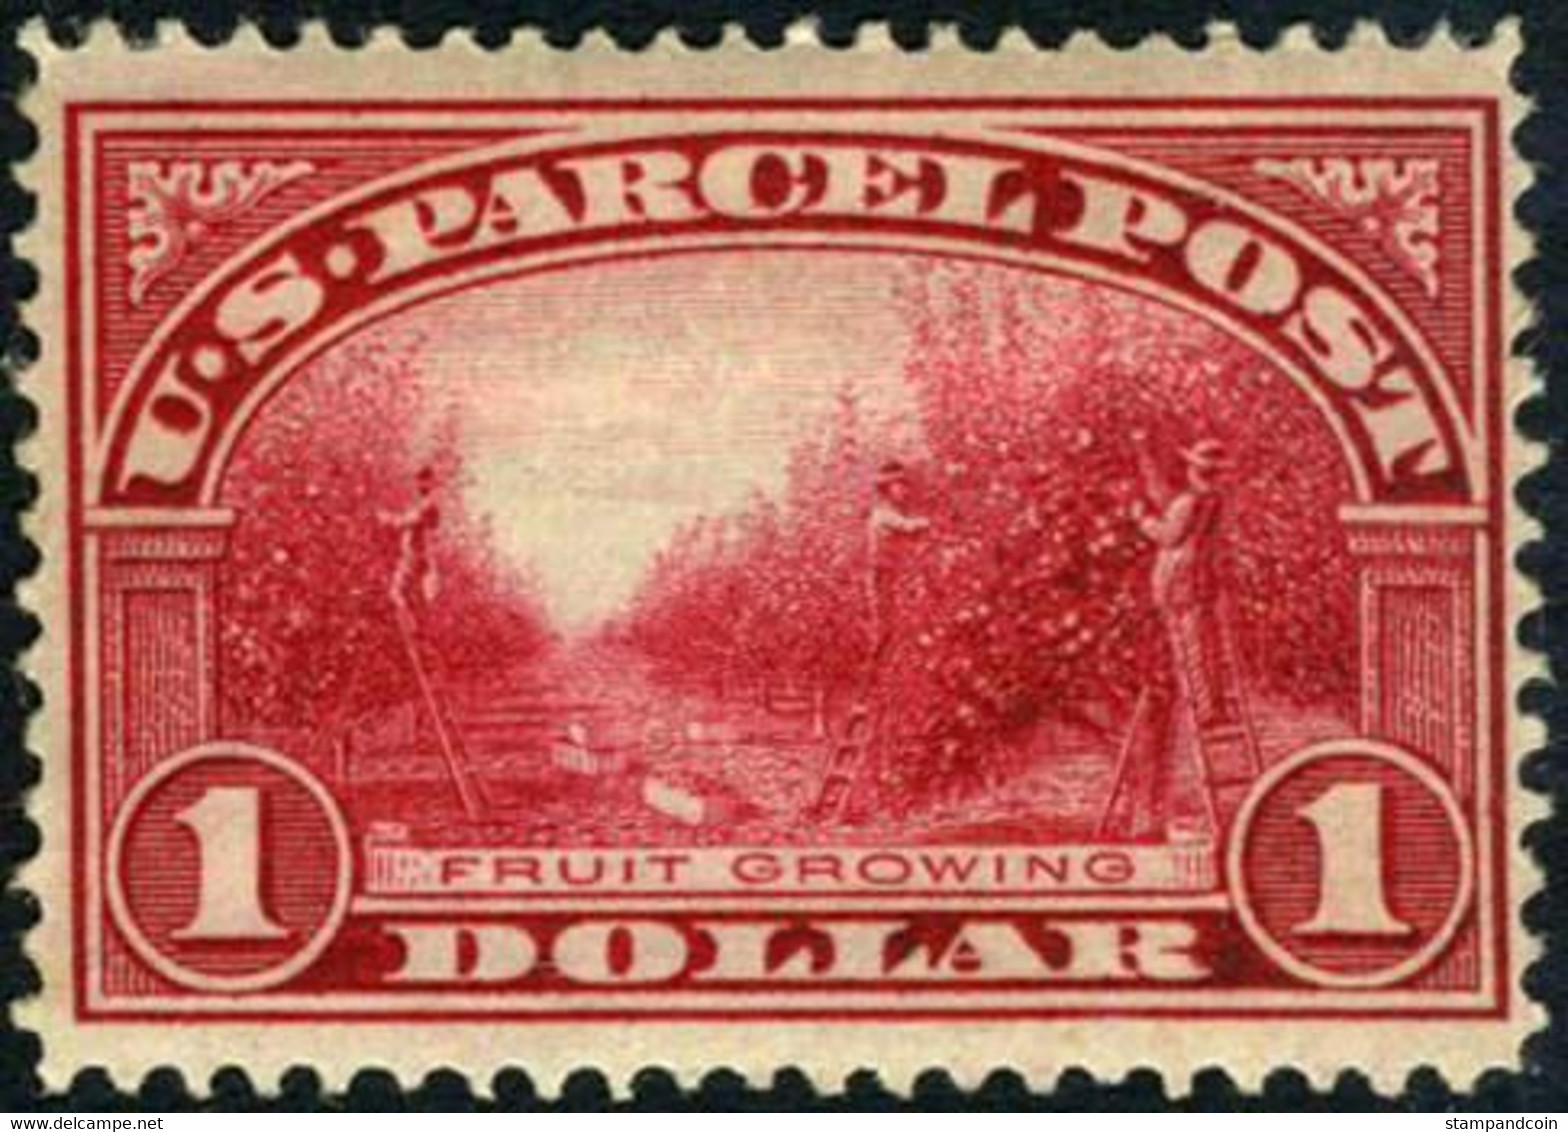 US Q12 VF Mint Hinged $1 Parcel Post Of 1913 - Reisgoedzegels